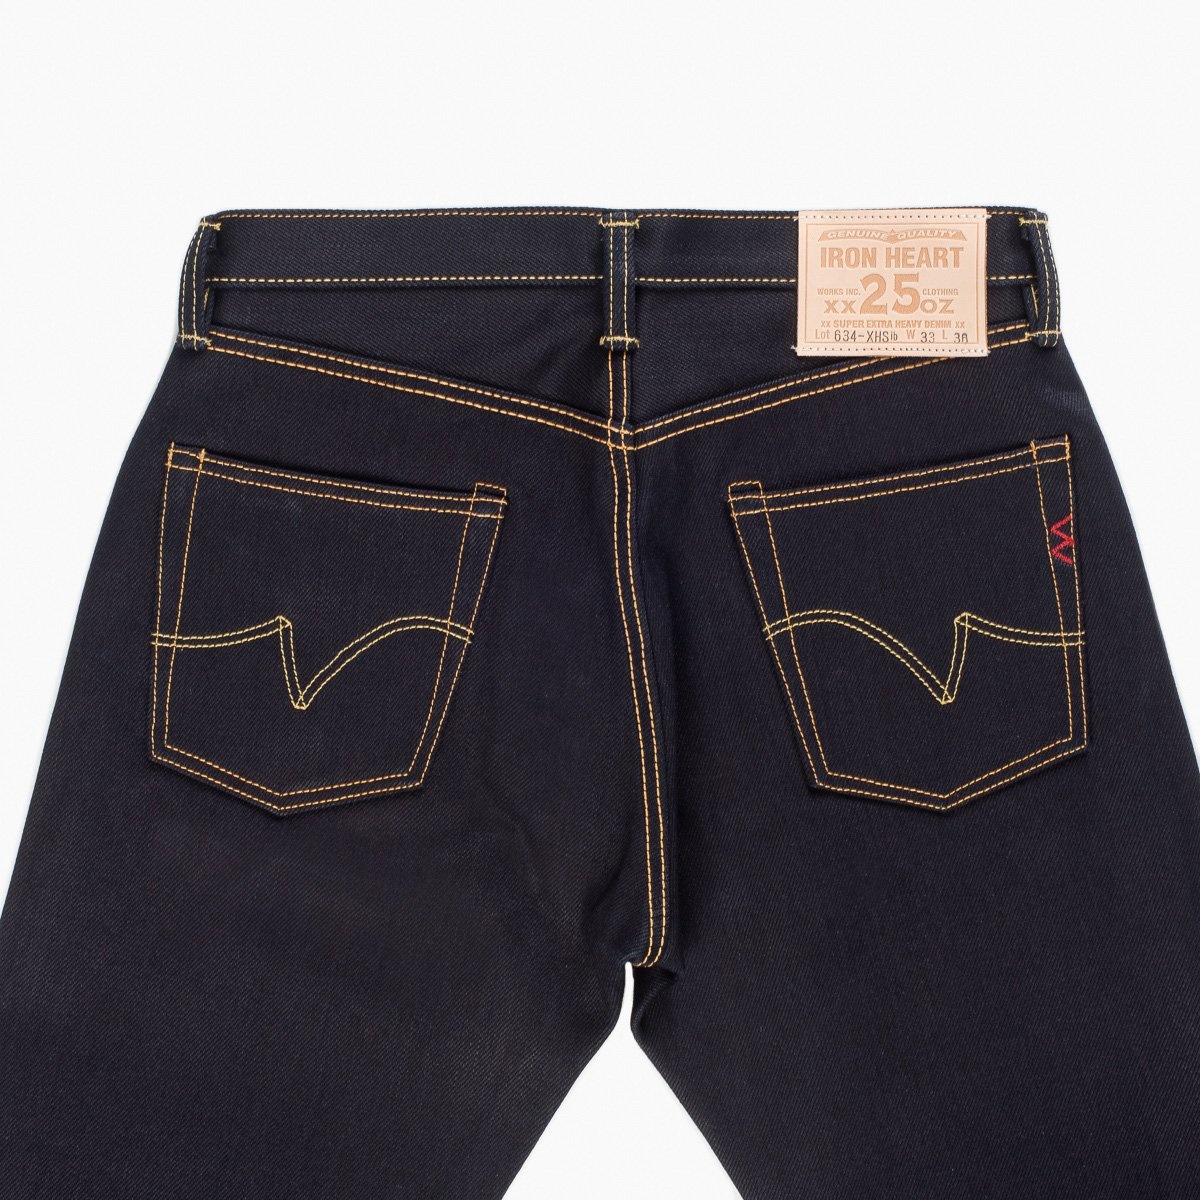 IH-634-XHSib 25oz Selvedge Denim Straight Cut Jeans - Indigo/Black - 7